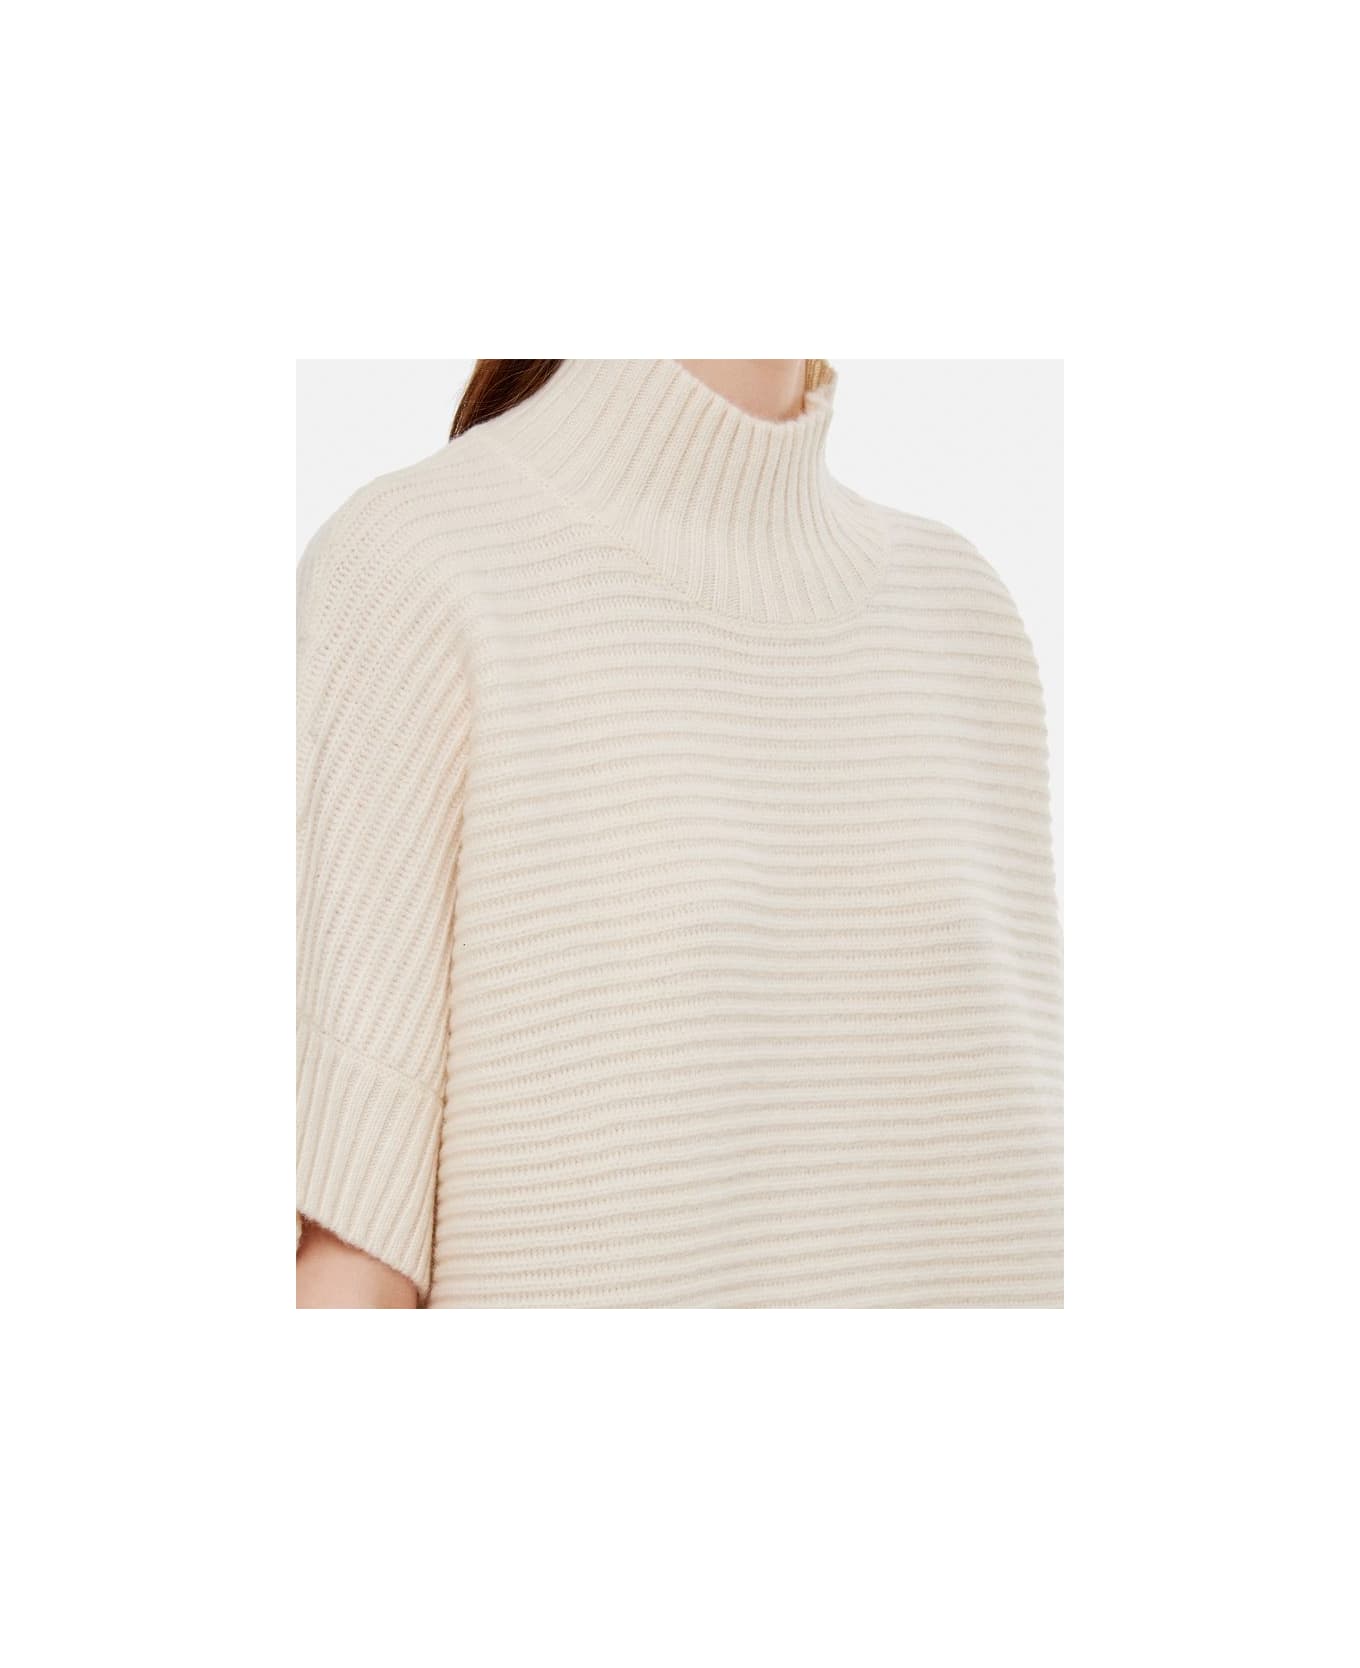 Max Mara Short Sleeves Turtleneck Sweater - White